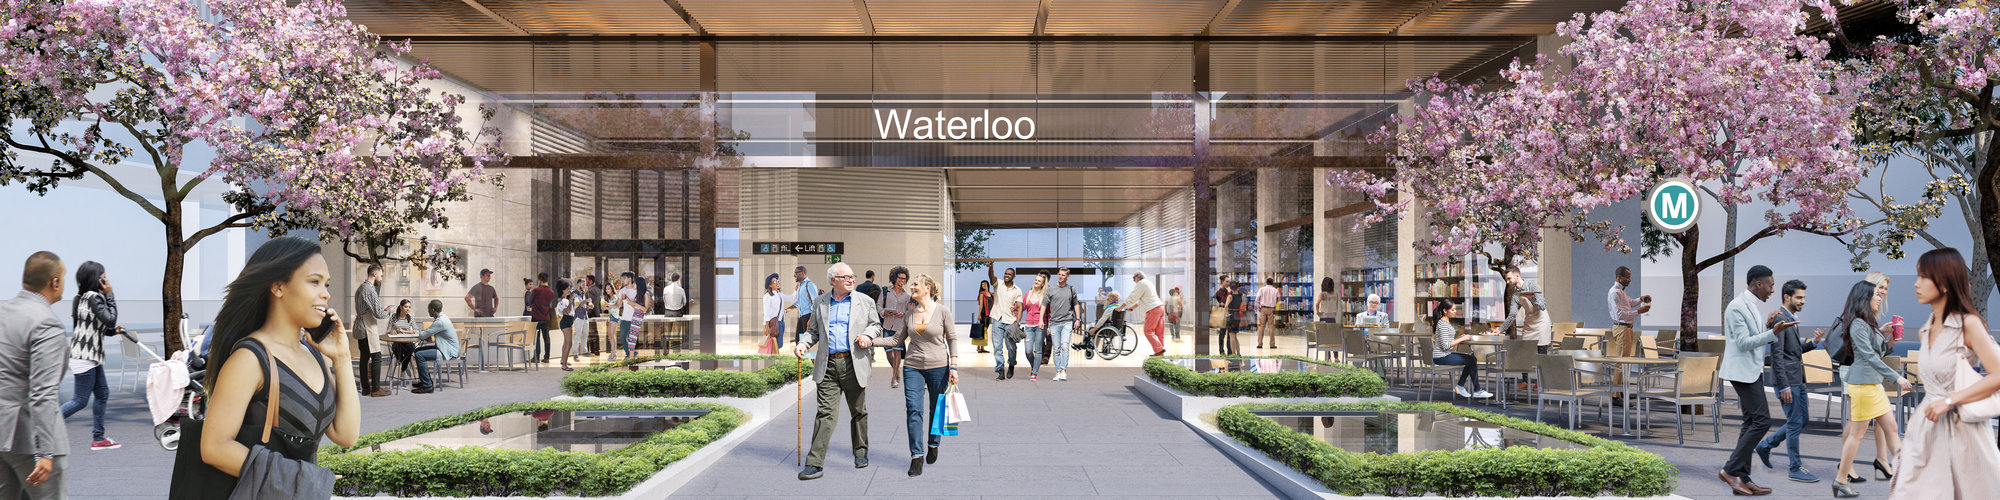 Artist's impression of Waterloo Station